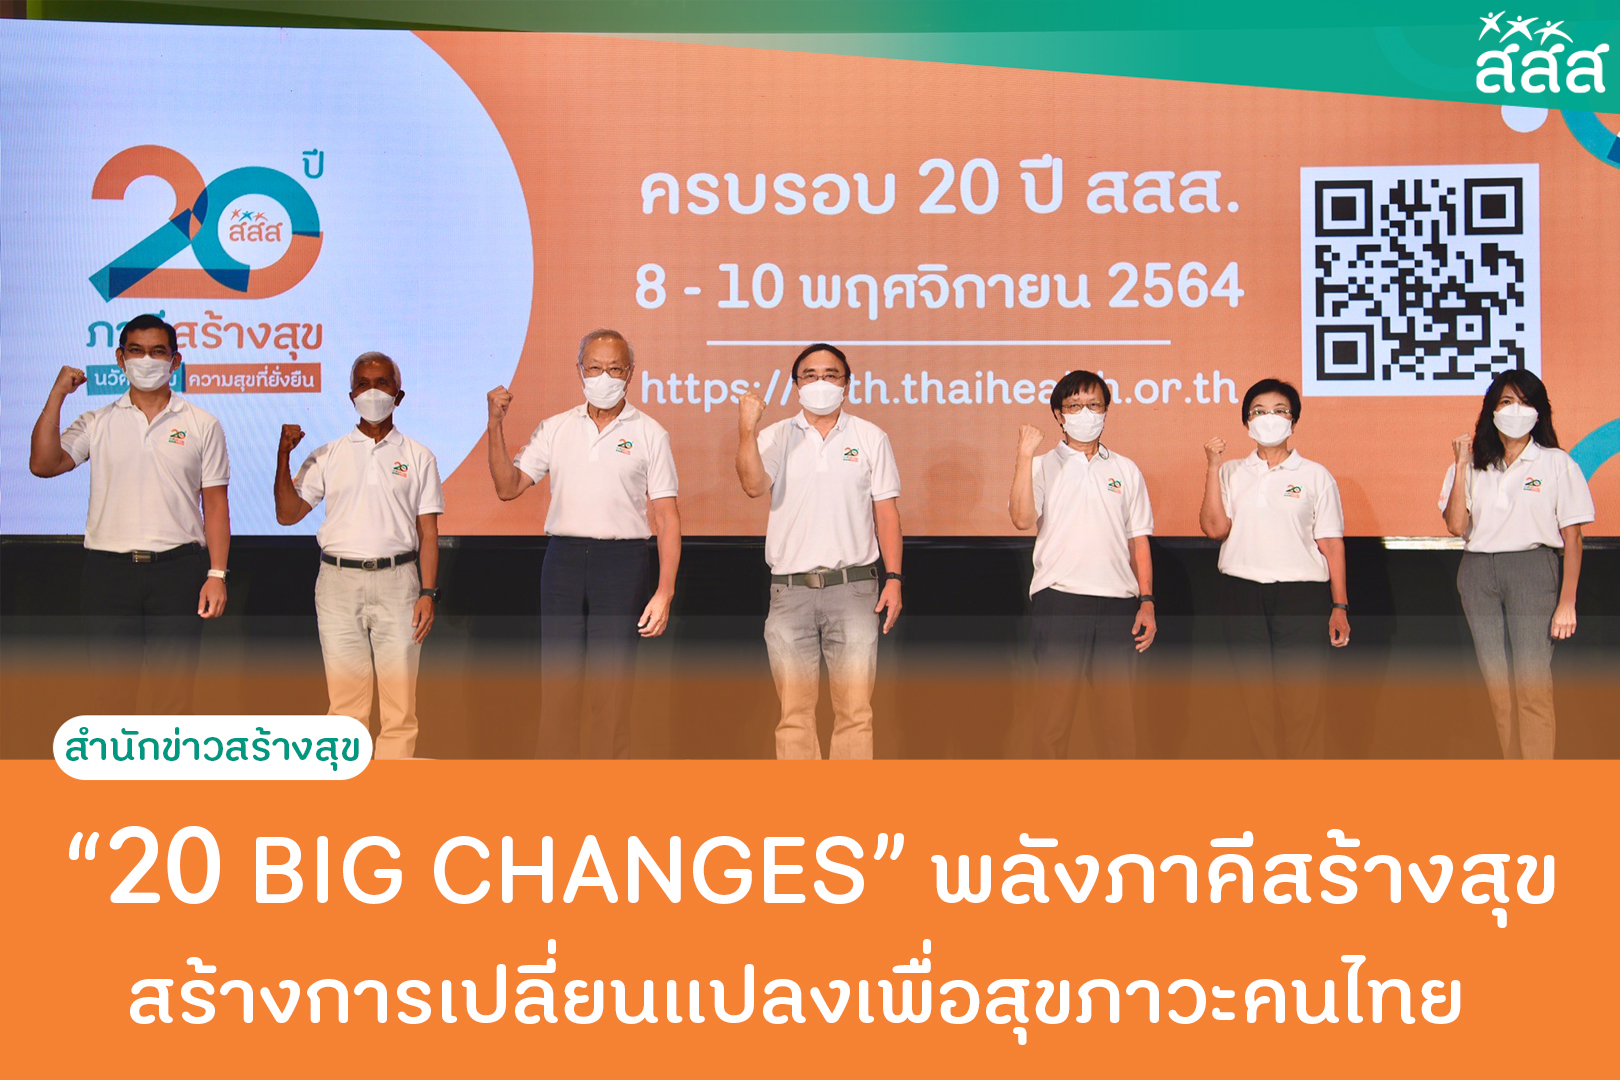 20 BIG CHANGES  พลังภาคีสร้างสุข สร้างการเปลี่ยนแปลงเพื่อสุขภาวะคนไทย  thaihealth